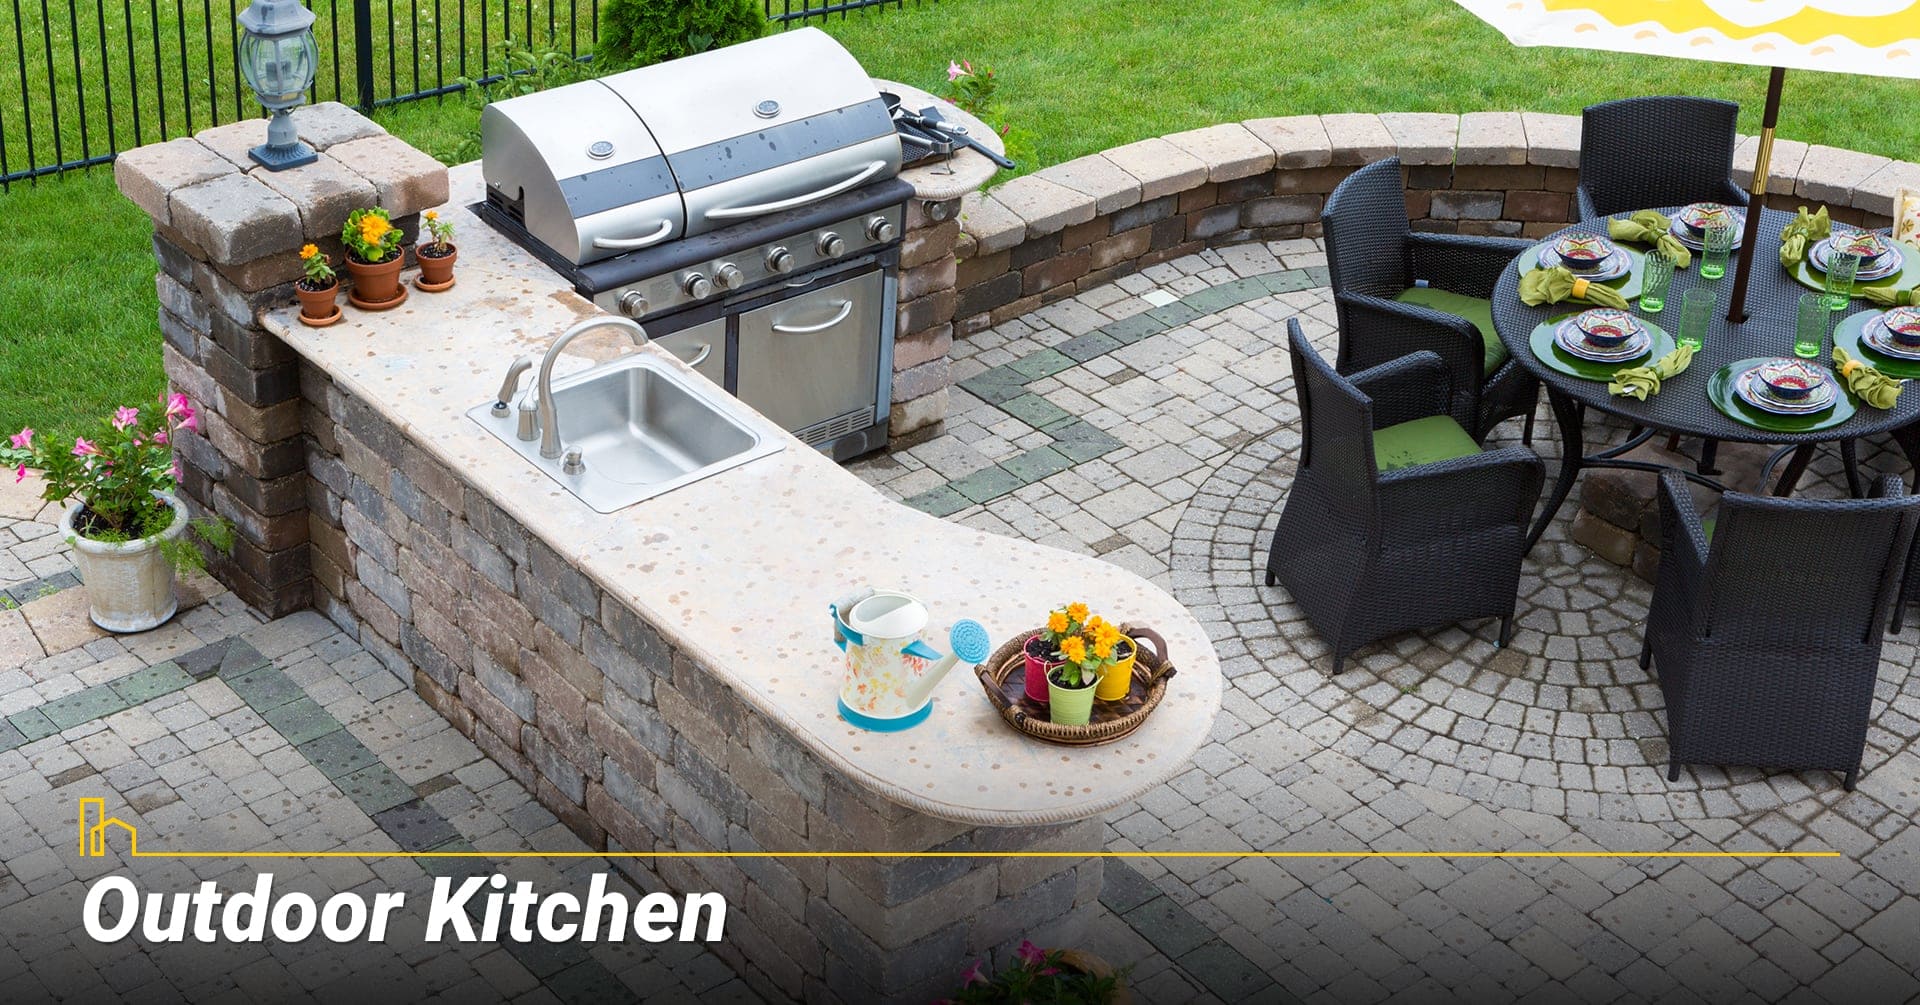 Outdoor Kitchen, install an outdoor kitchen area